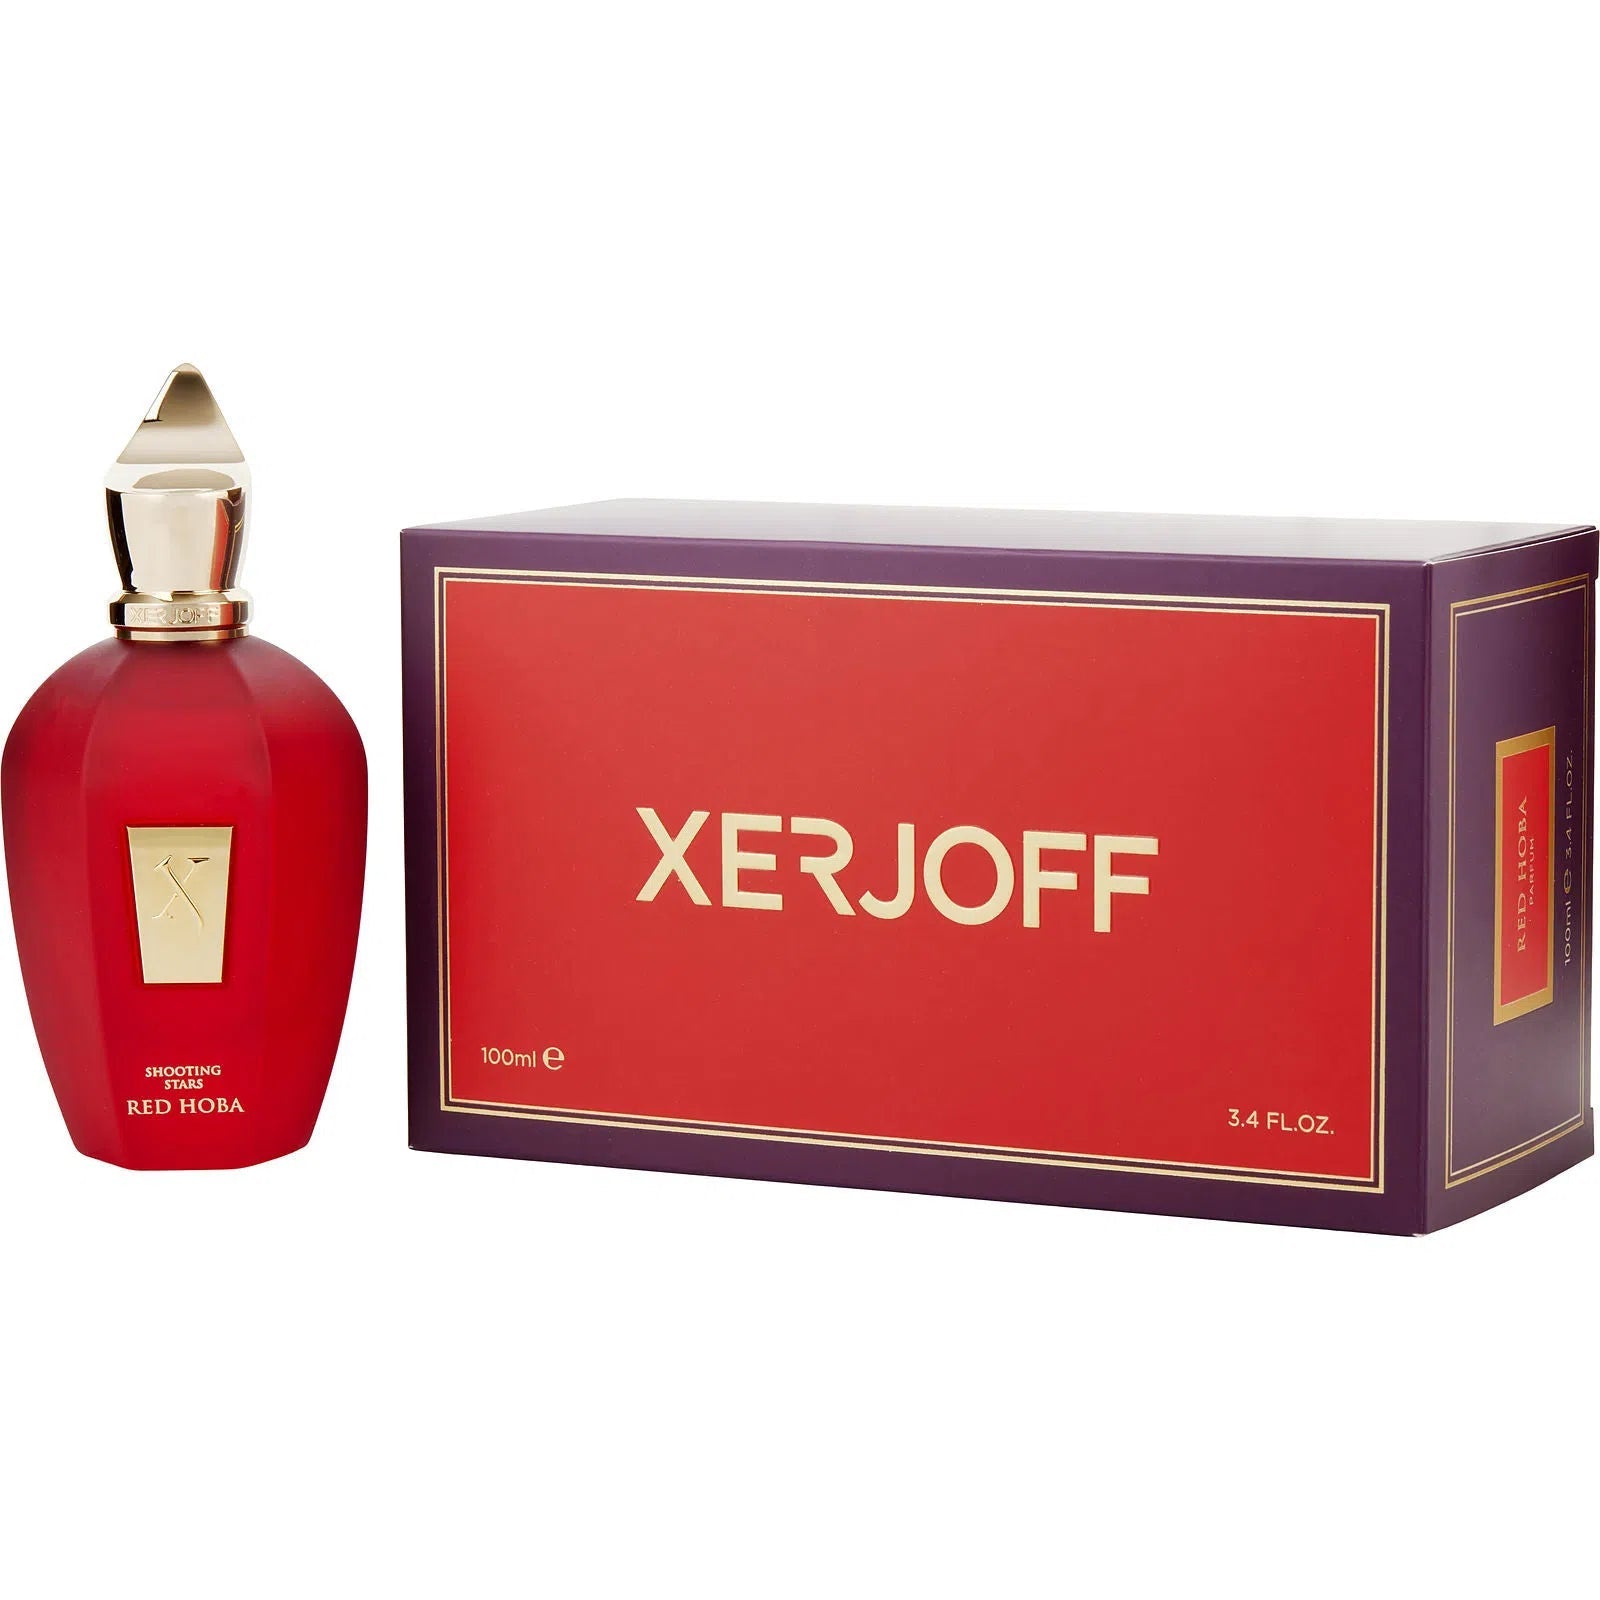 Perfume Xerjoff Shooting Stars Red Hoba Parfum (U) / 100 ml - 8033488151973- 1 - Prive Perfumes Honduras